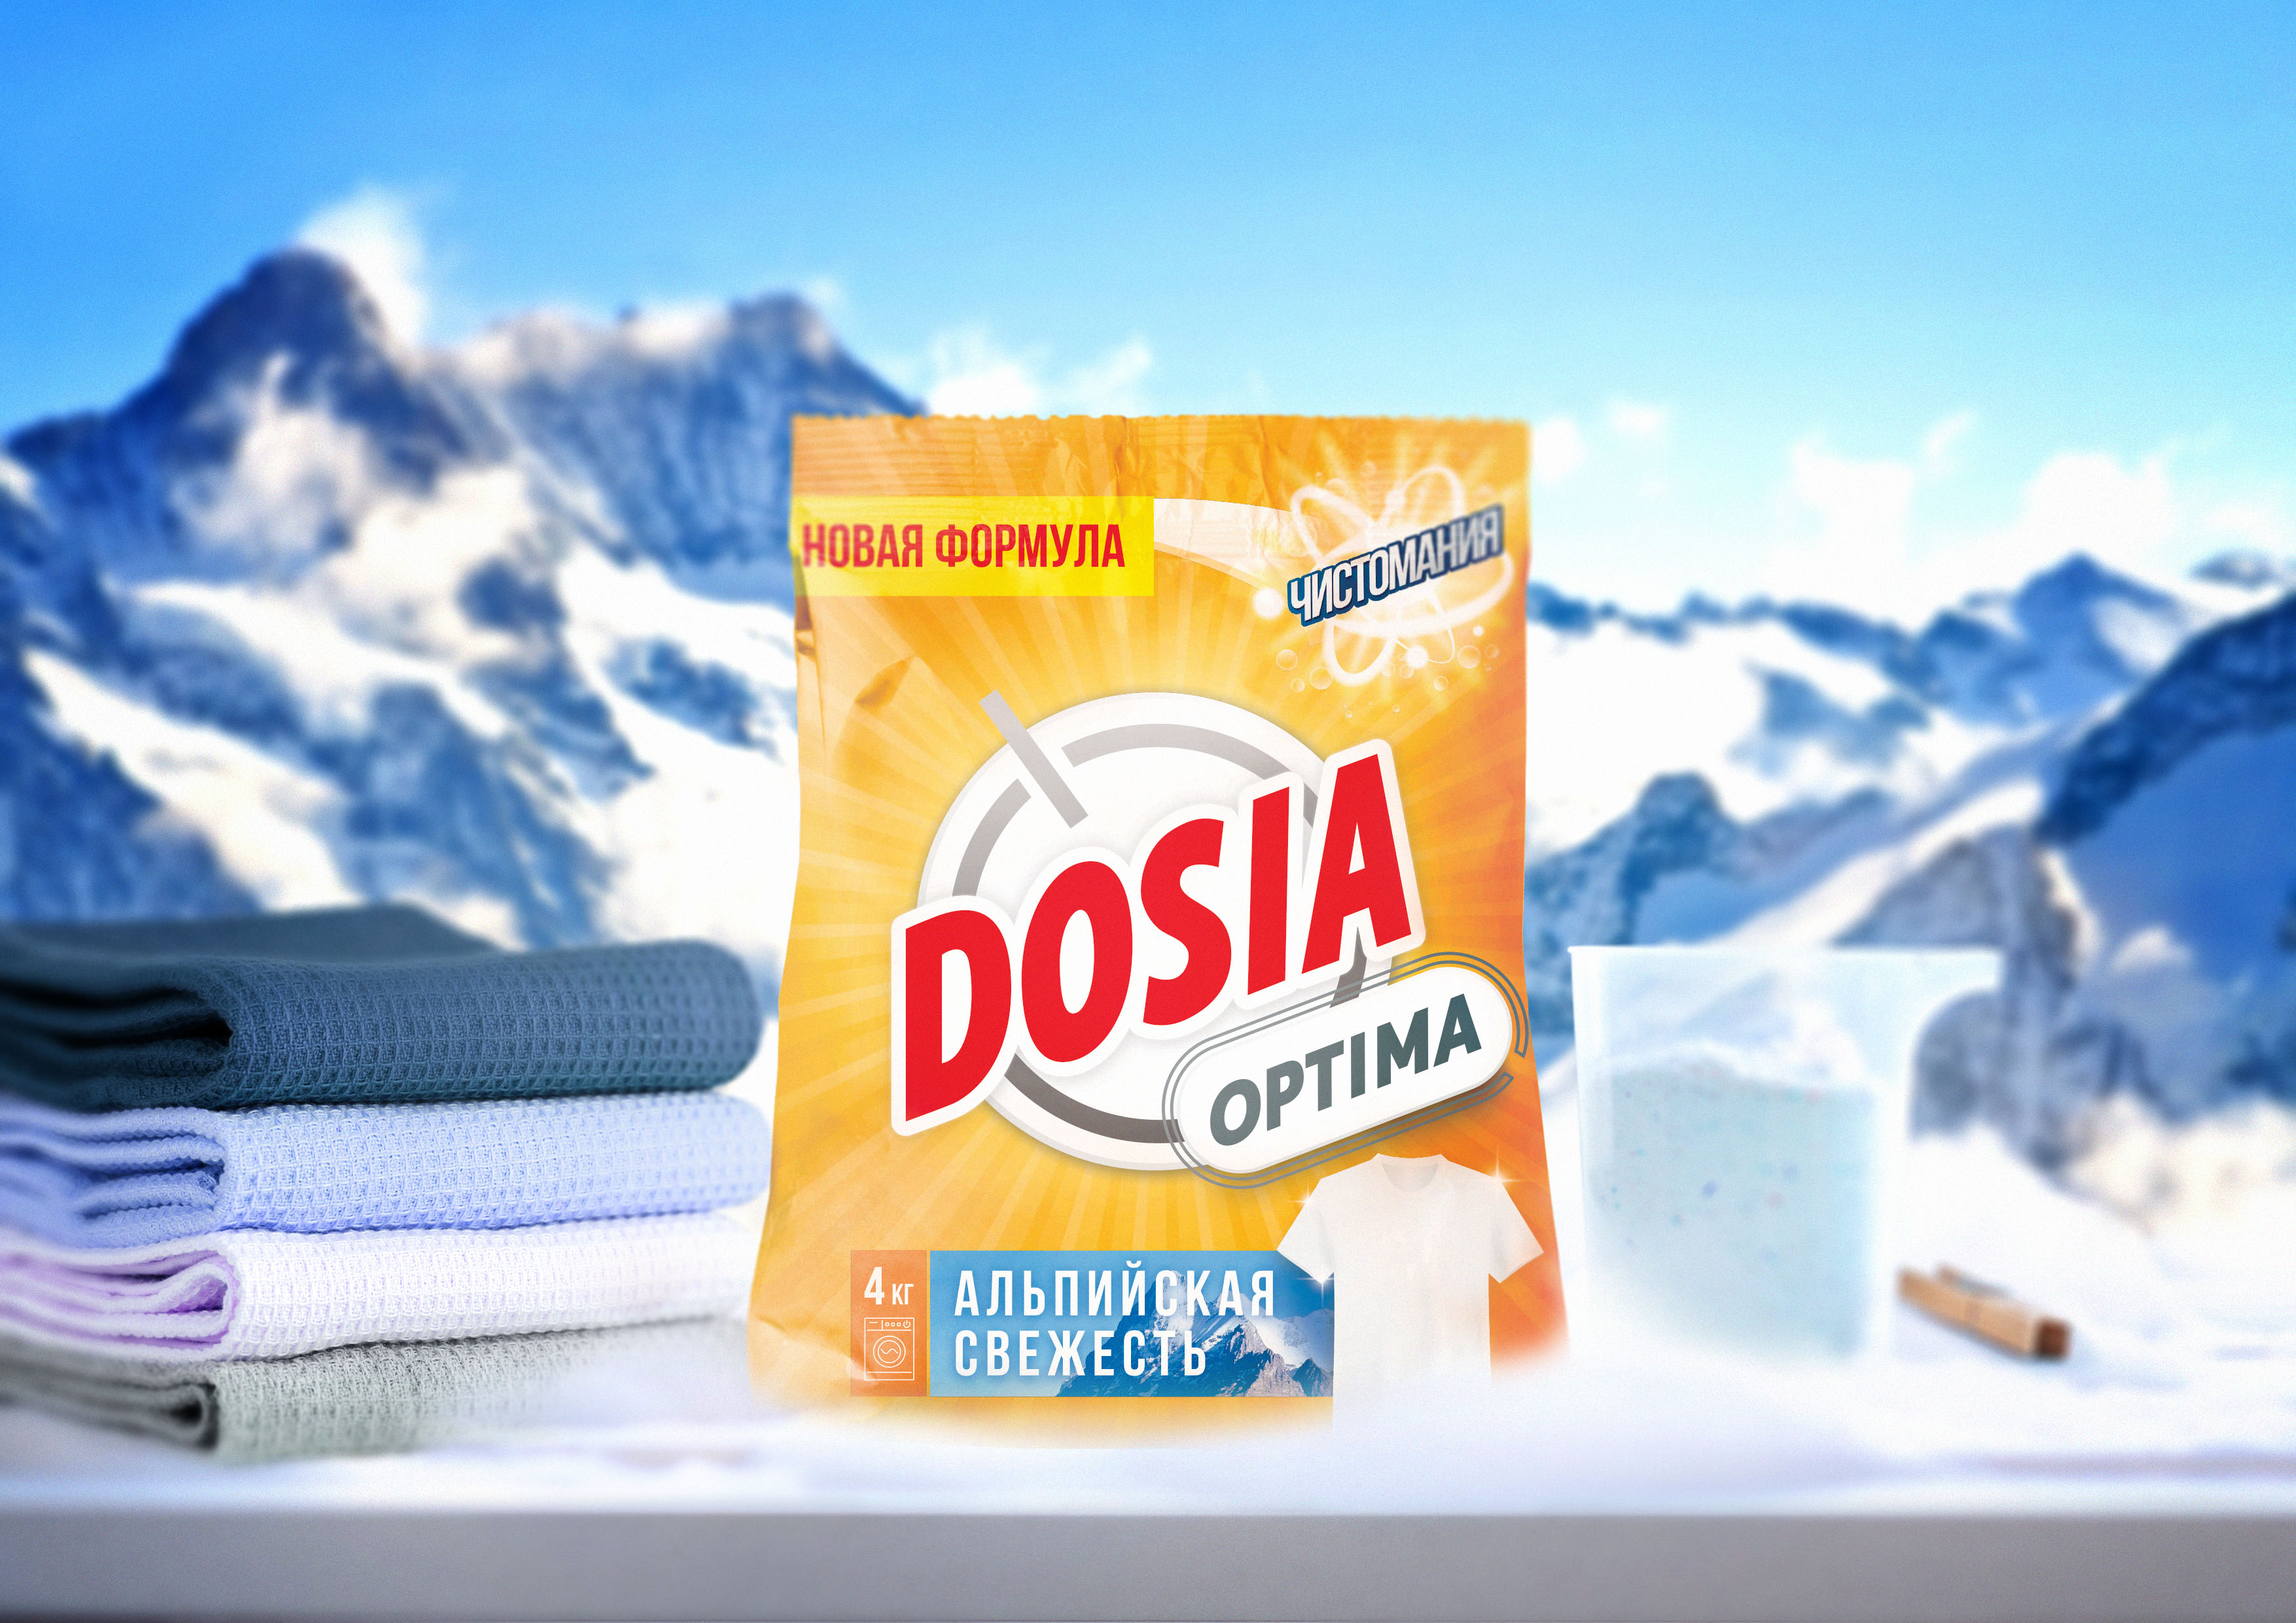 Unibe Branding Agency has Developed New Packaging Design for DOSIA